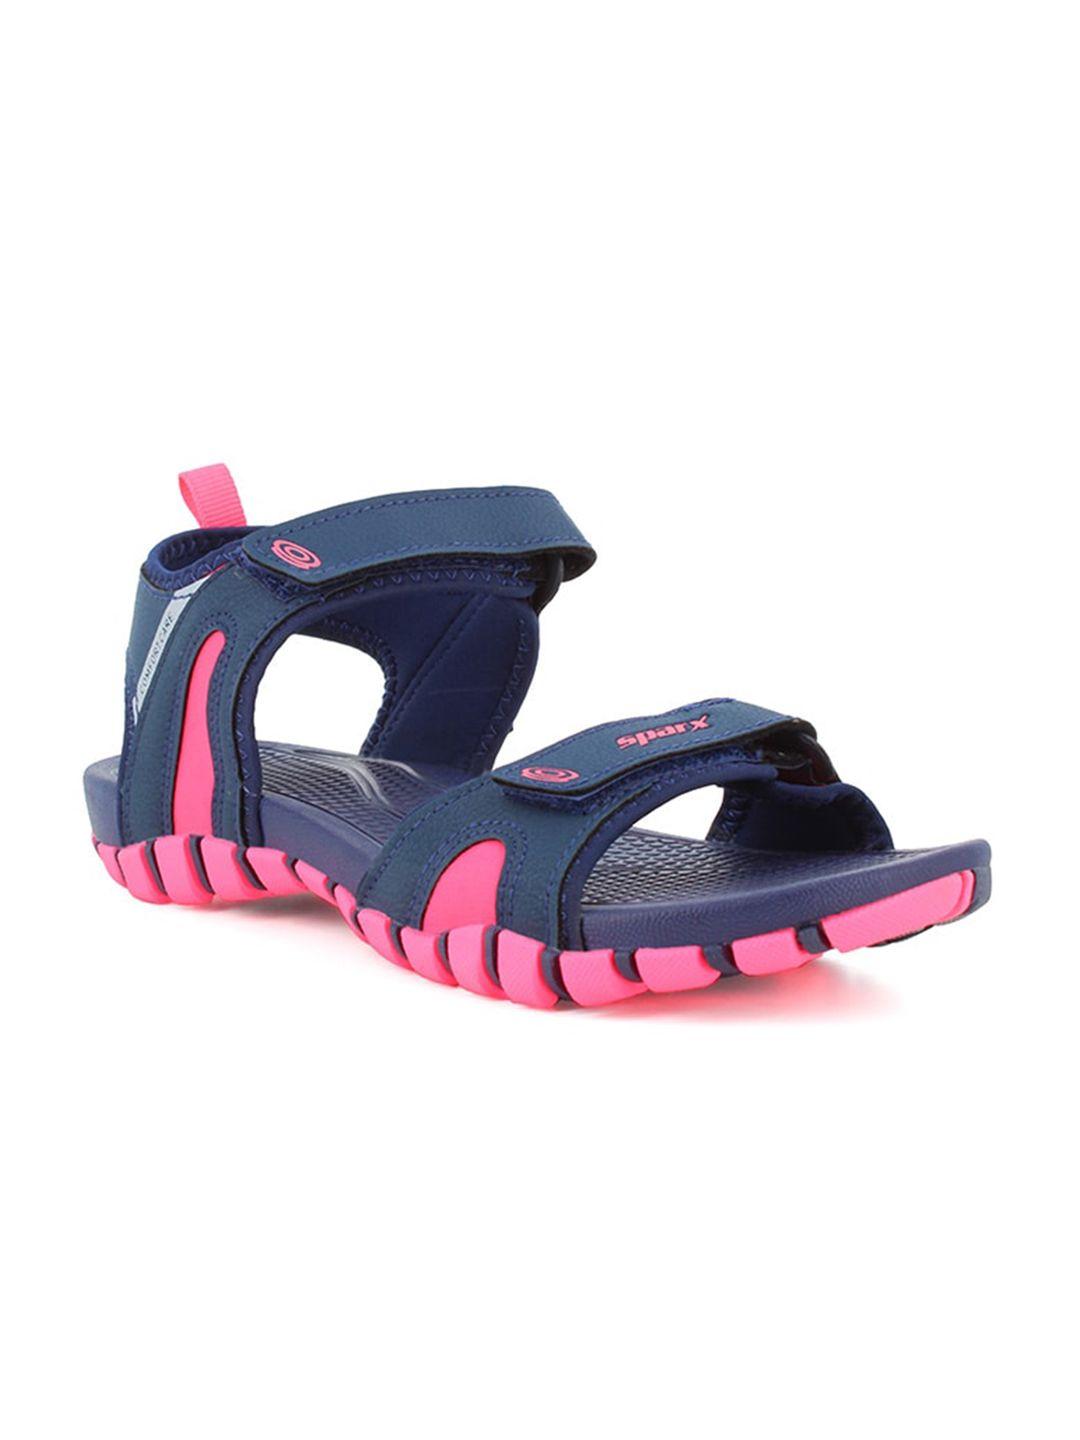 sparx women navy blue & pink solid sports sandals